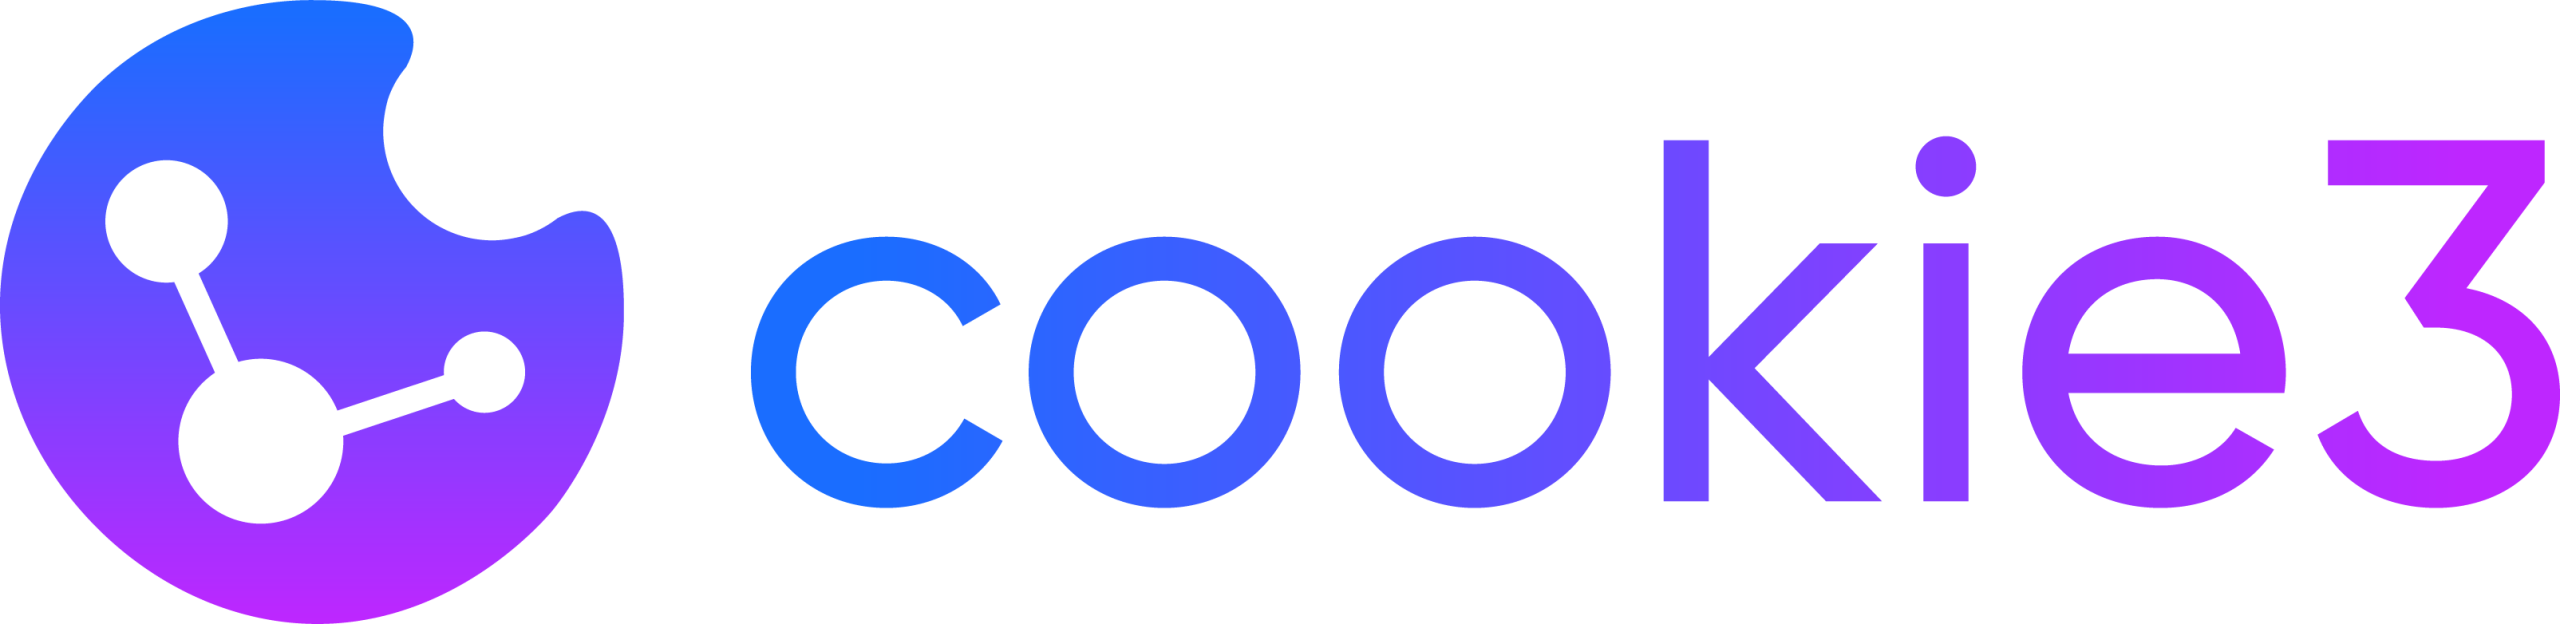 Cookie3-logo-grandient